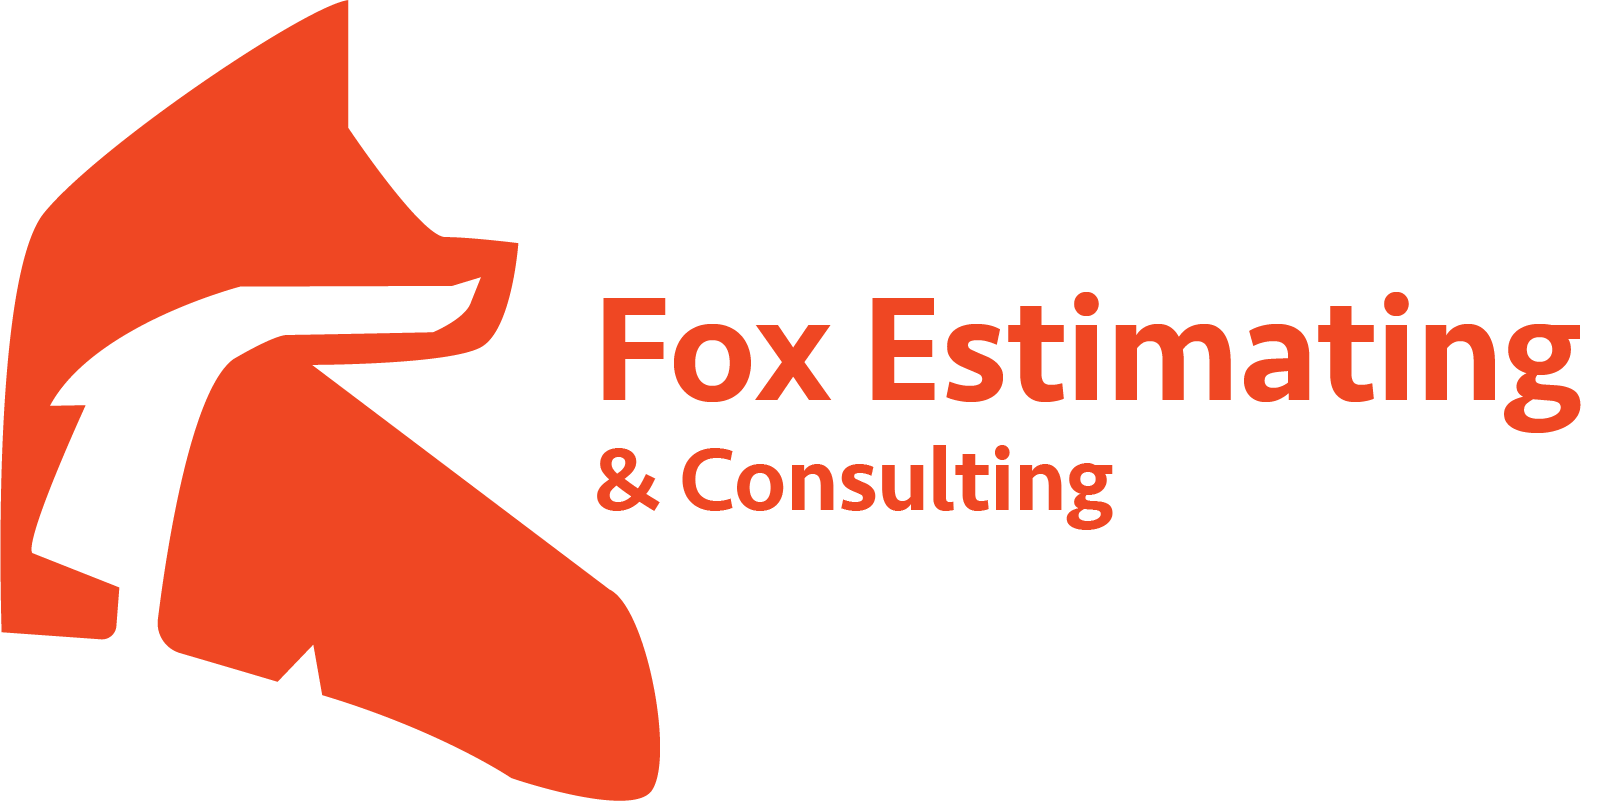 Fox Estimating & Consulting, LLCSteve Krasnowski, Owner630-443-4544krasnowski45@sbcglobal.net